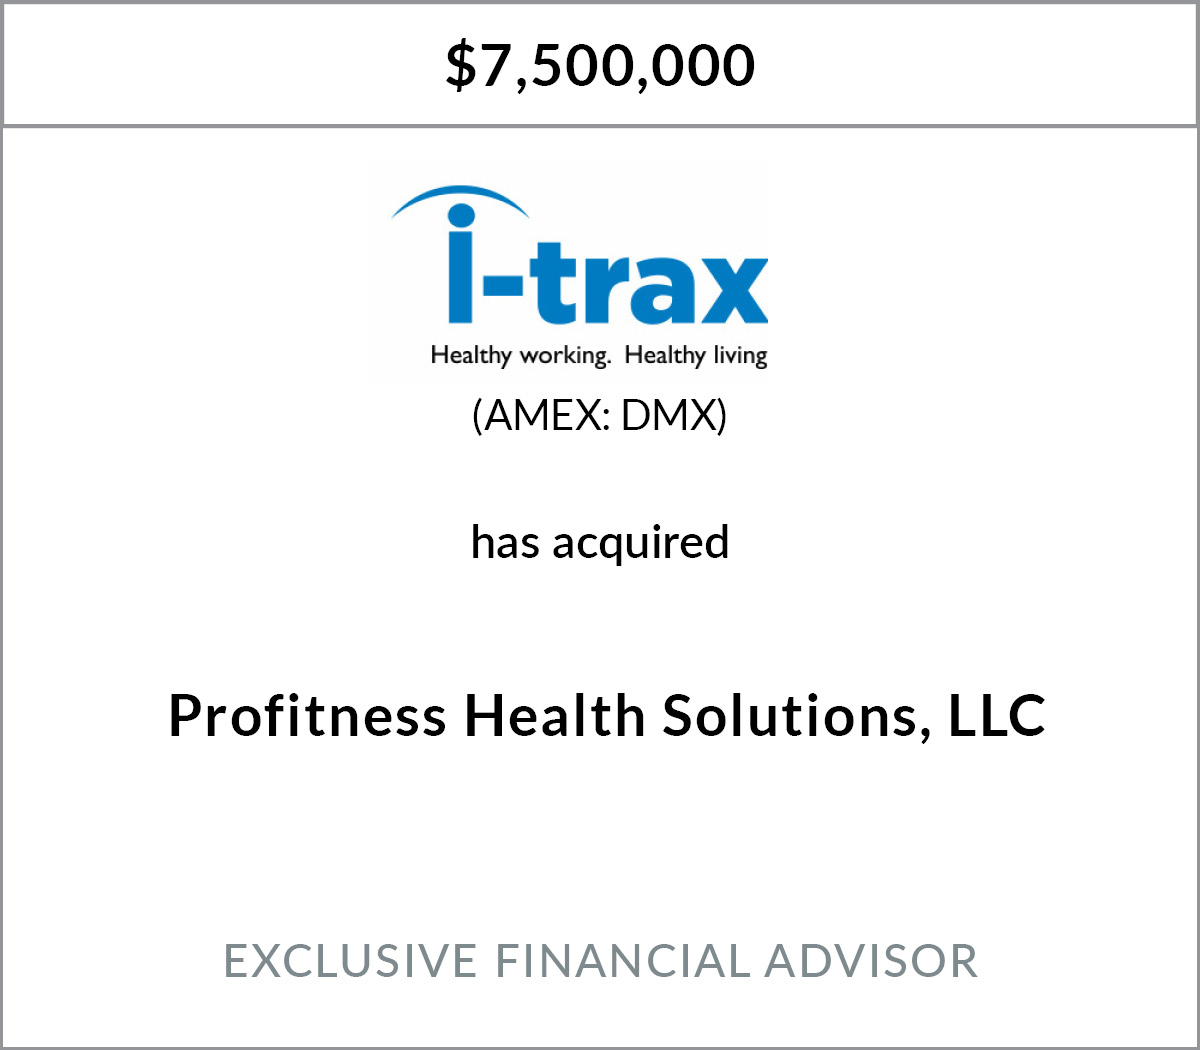 i-Trax has acquired ProFitness Health Solutions, LLC